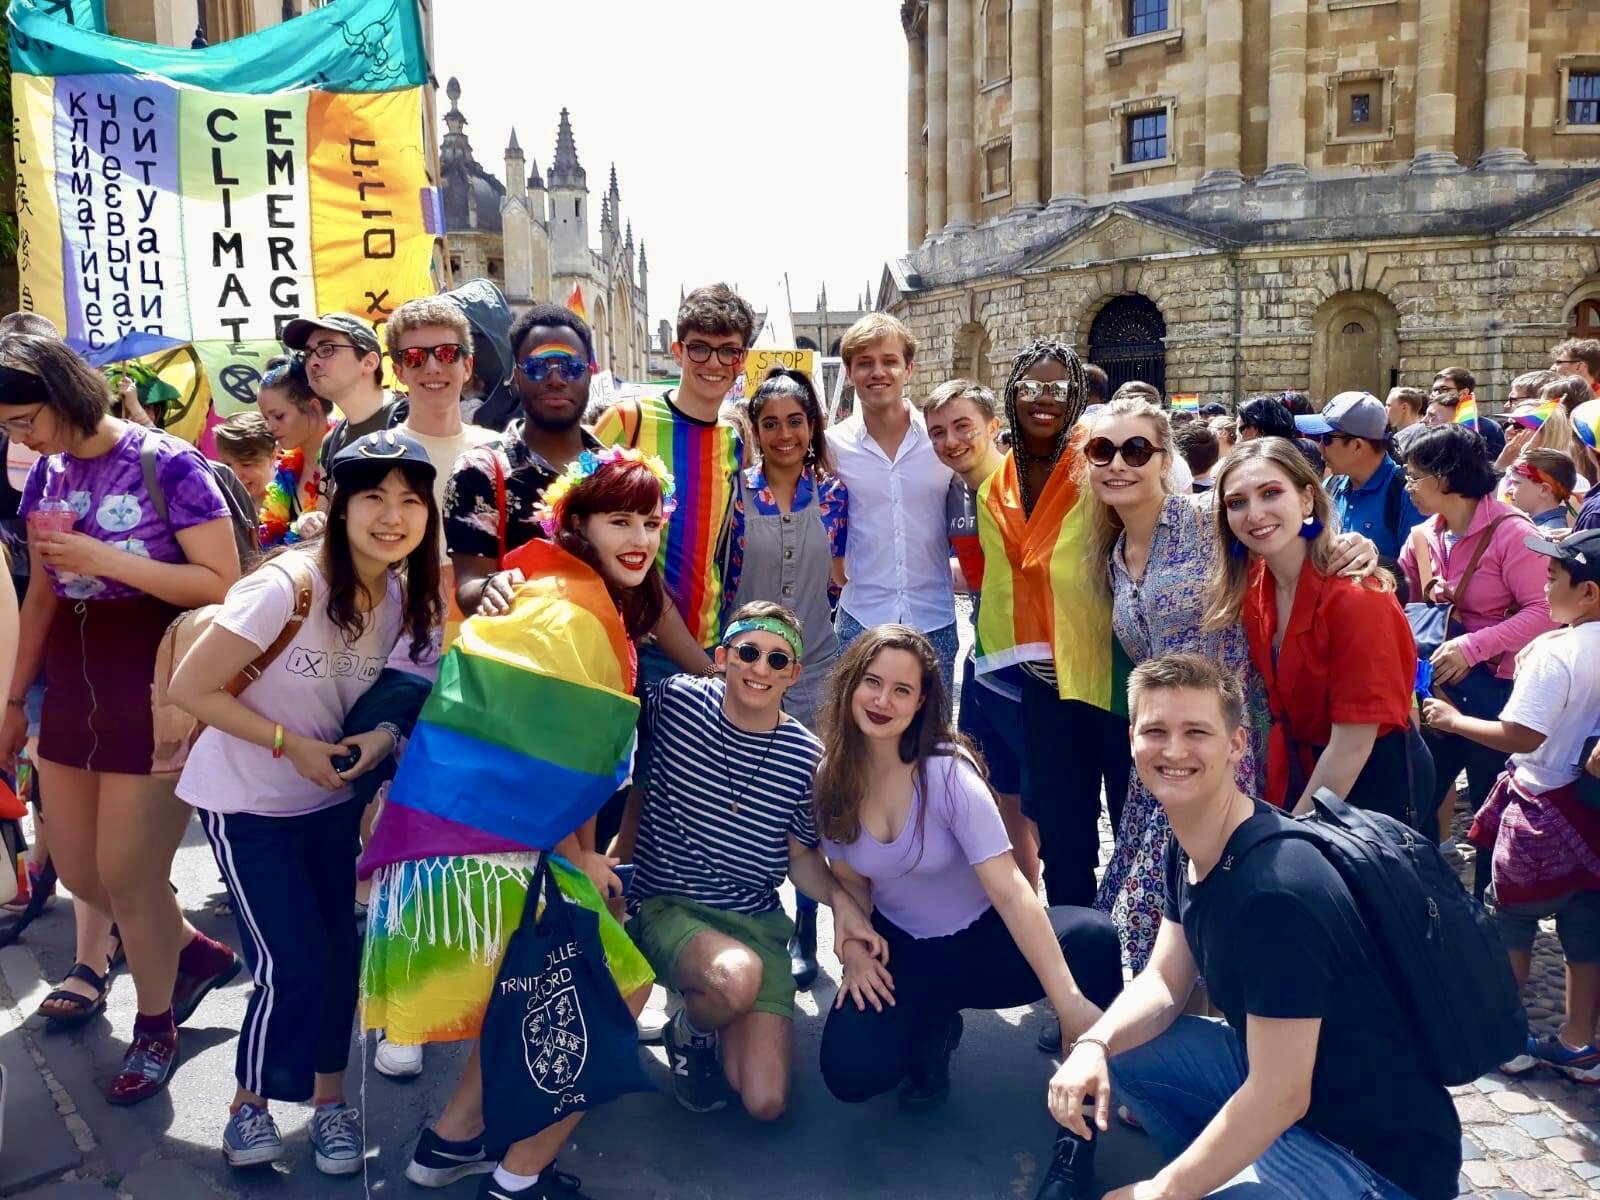 MCR group at Oxford Pride 2019